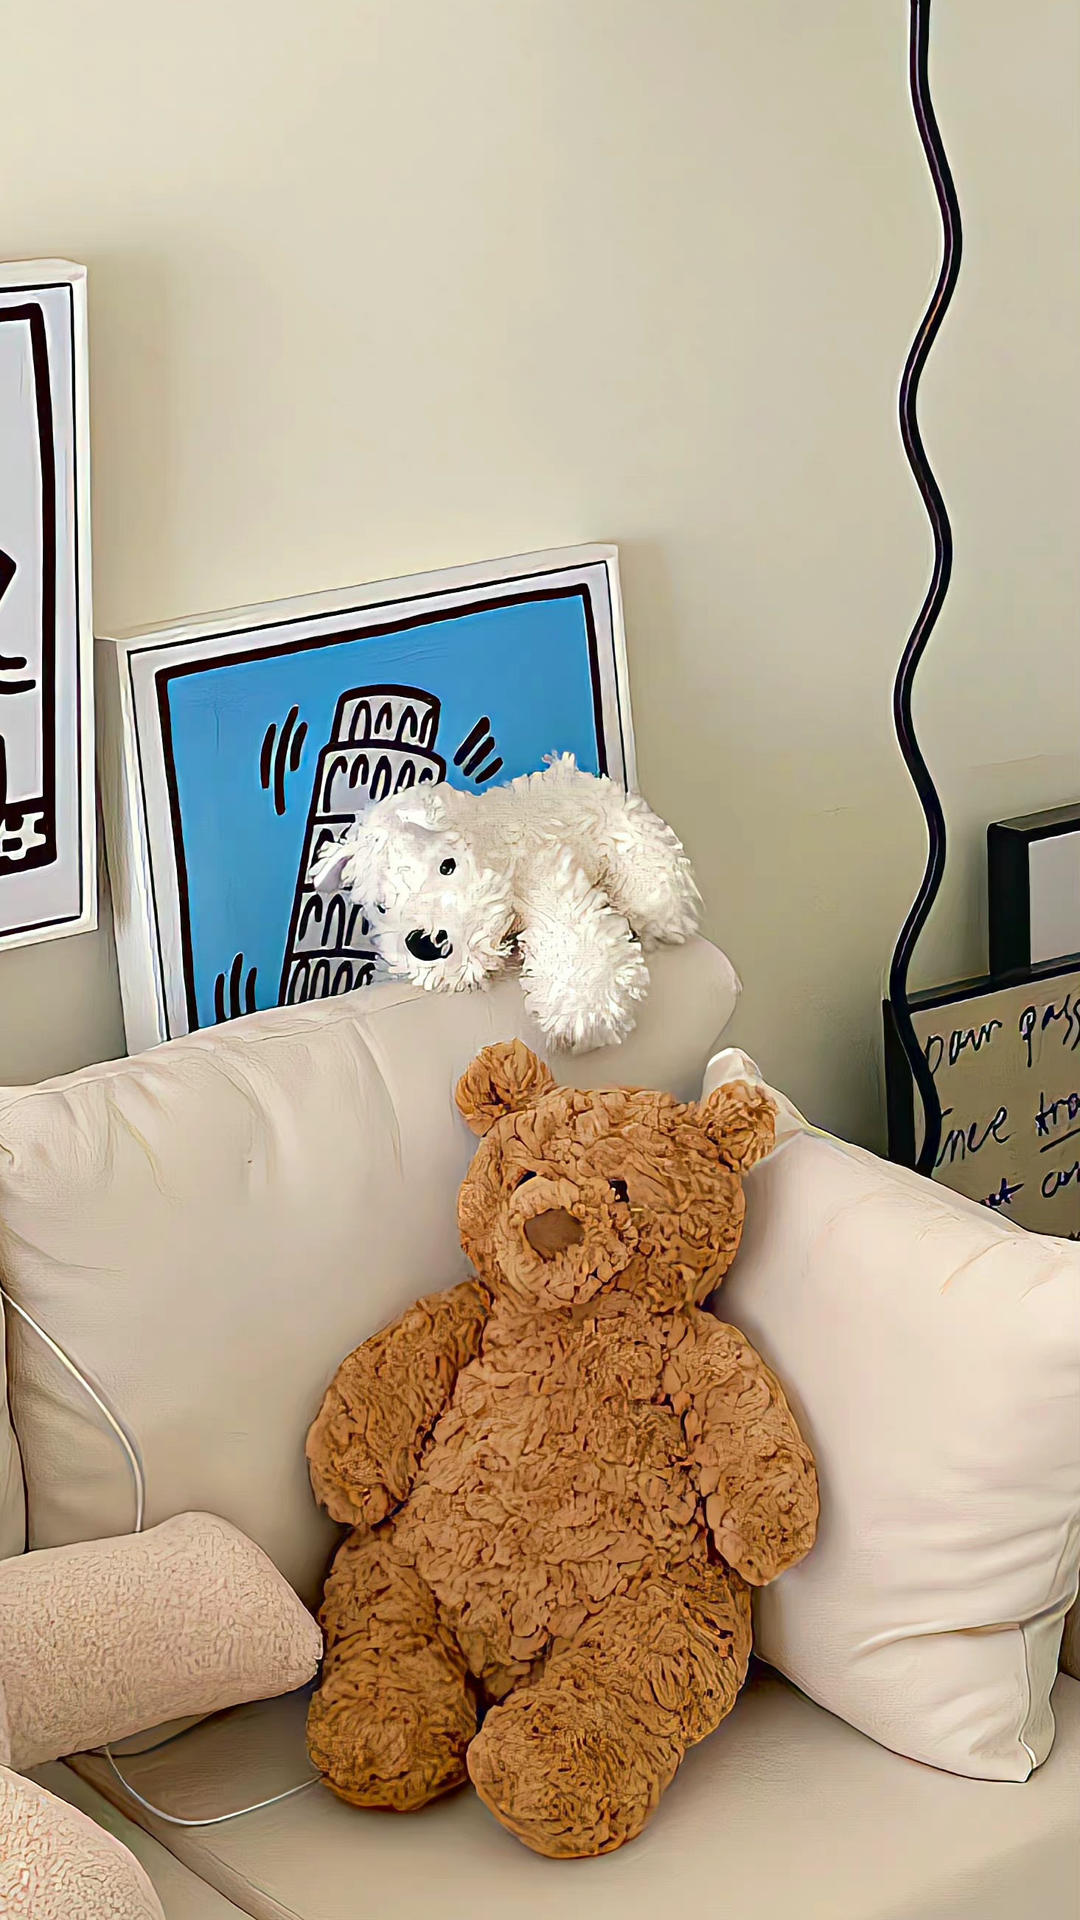 小熊,沙发,物语,简约